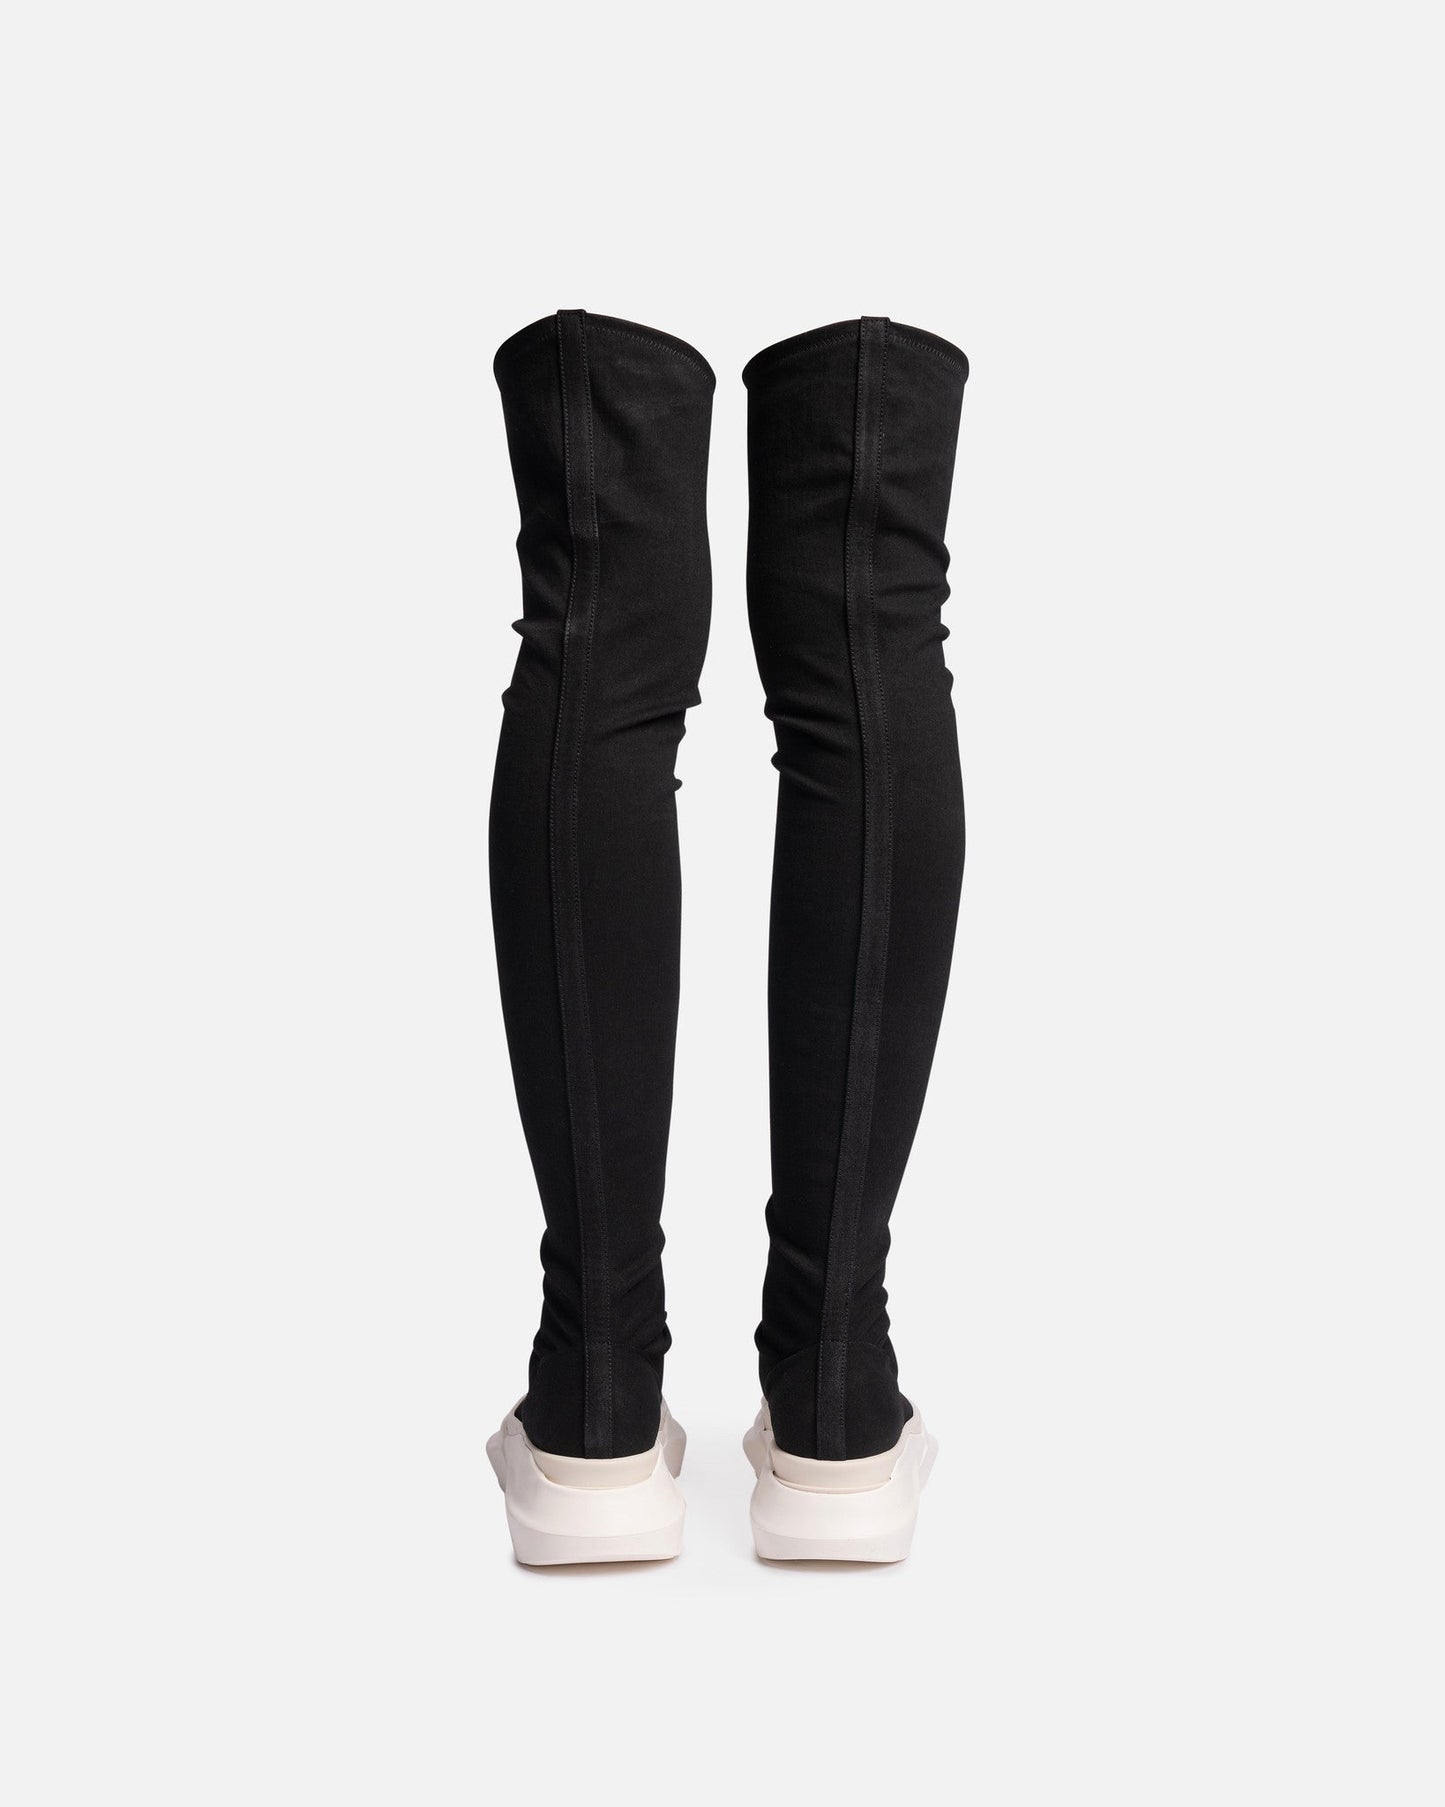 Rick Owens DRKSHDW Women's Shoes Denim Abstract Stockings in Black/Milk